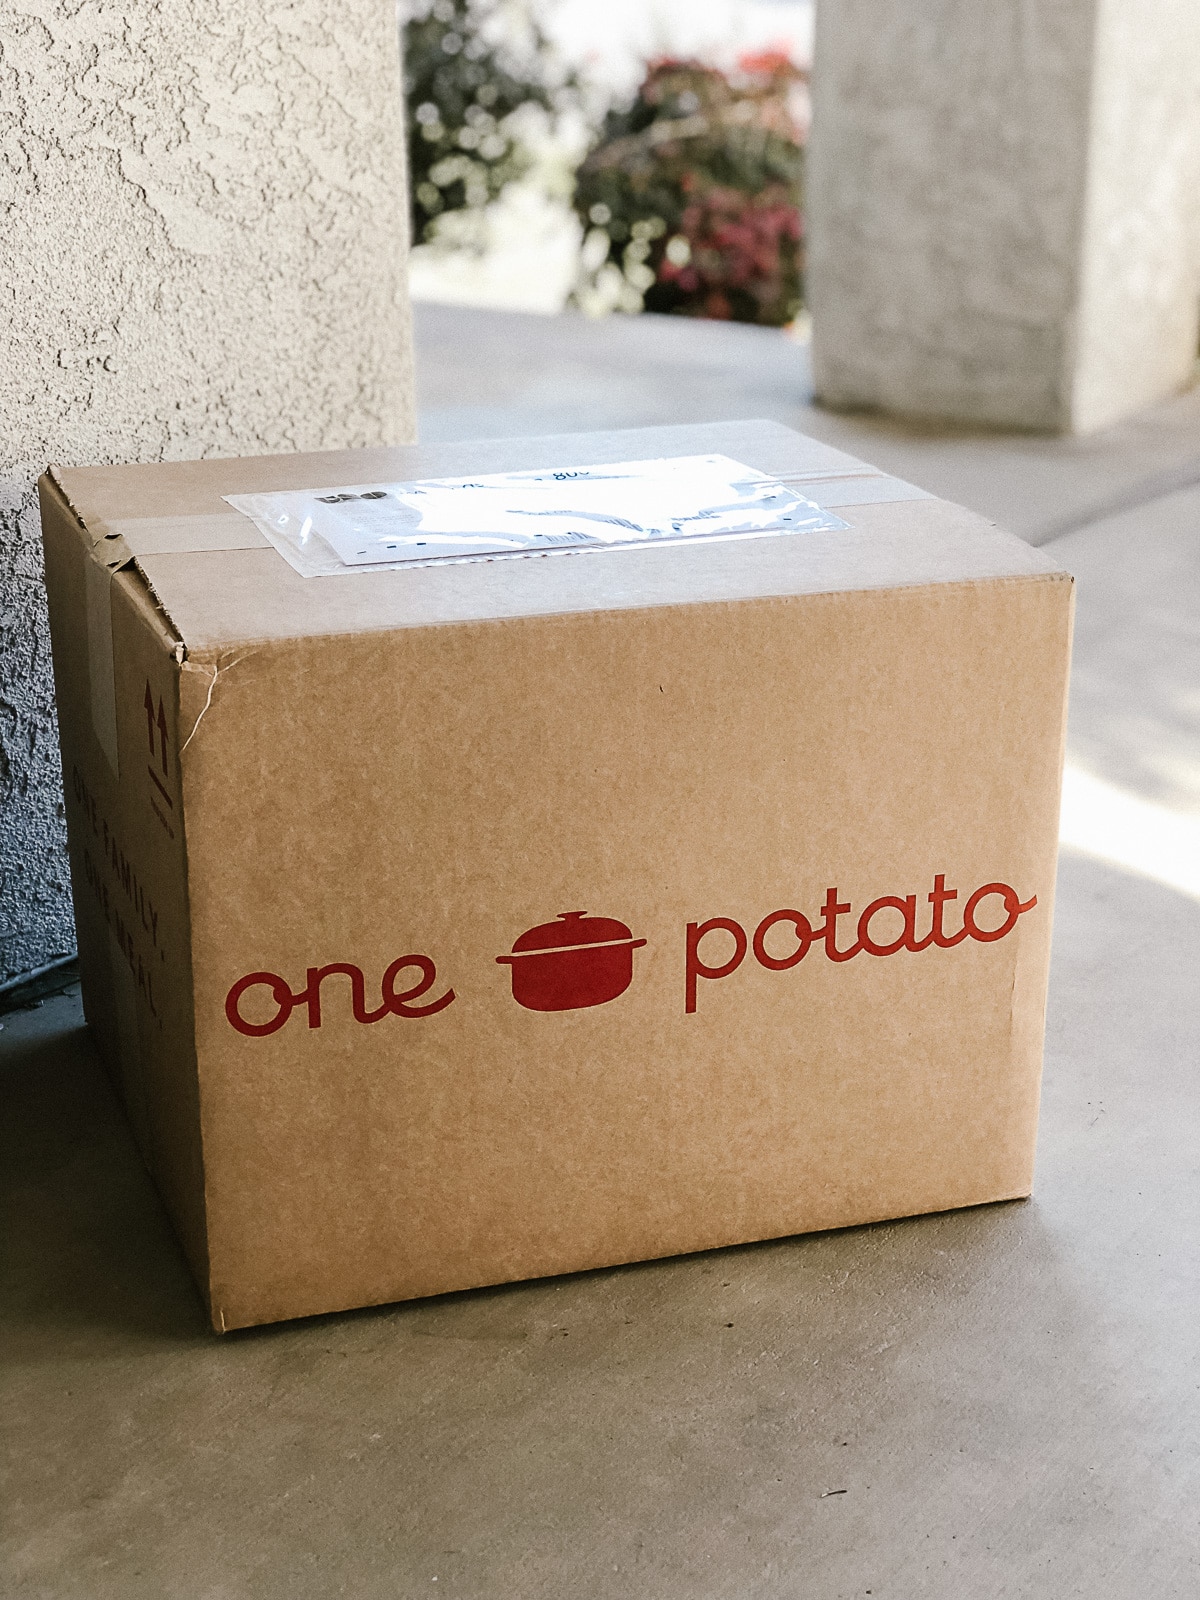 One Potato Food Subscription Box + Coupon Code